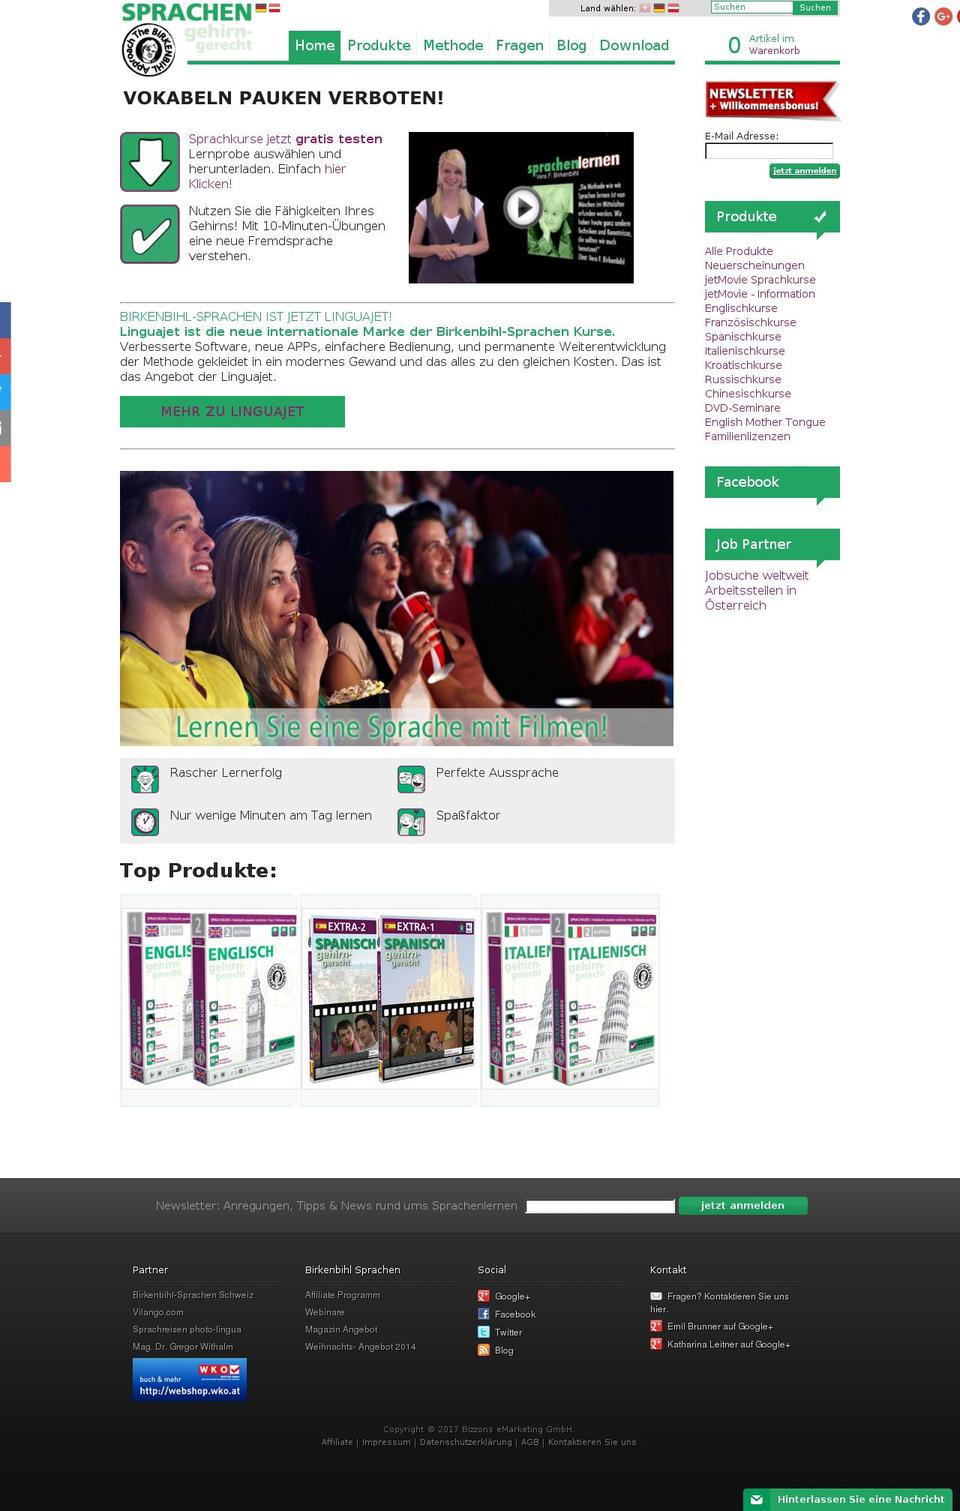 vilango.tv shopify website screenshot